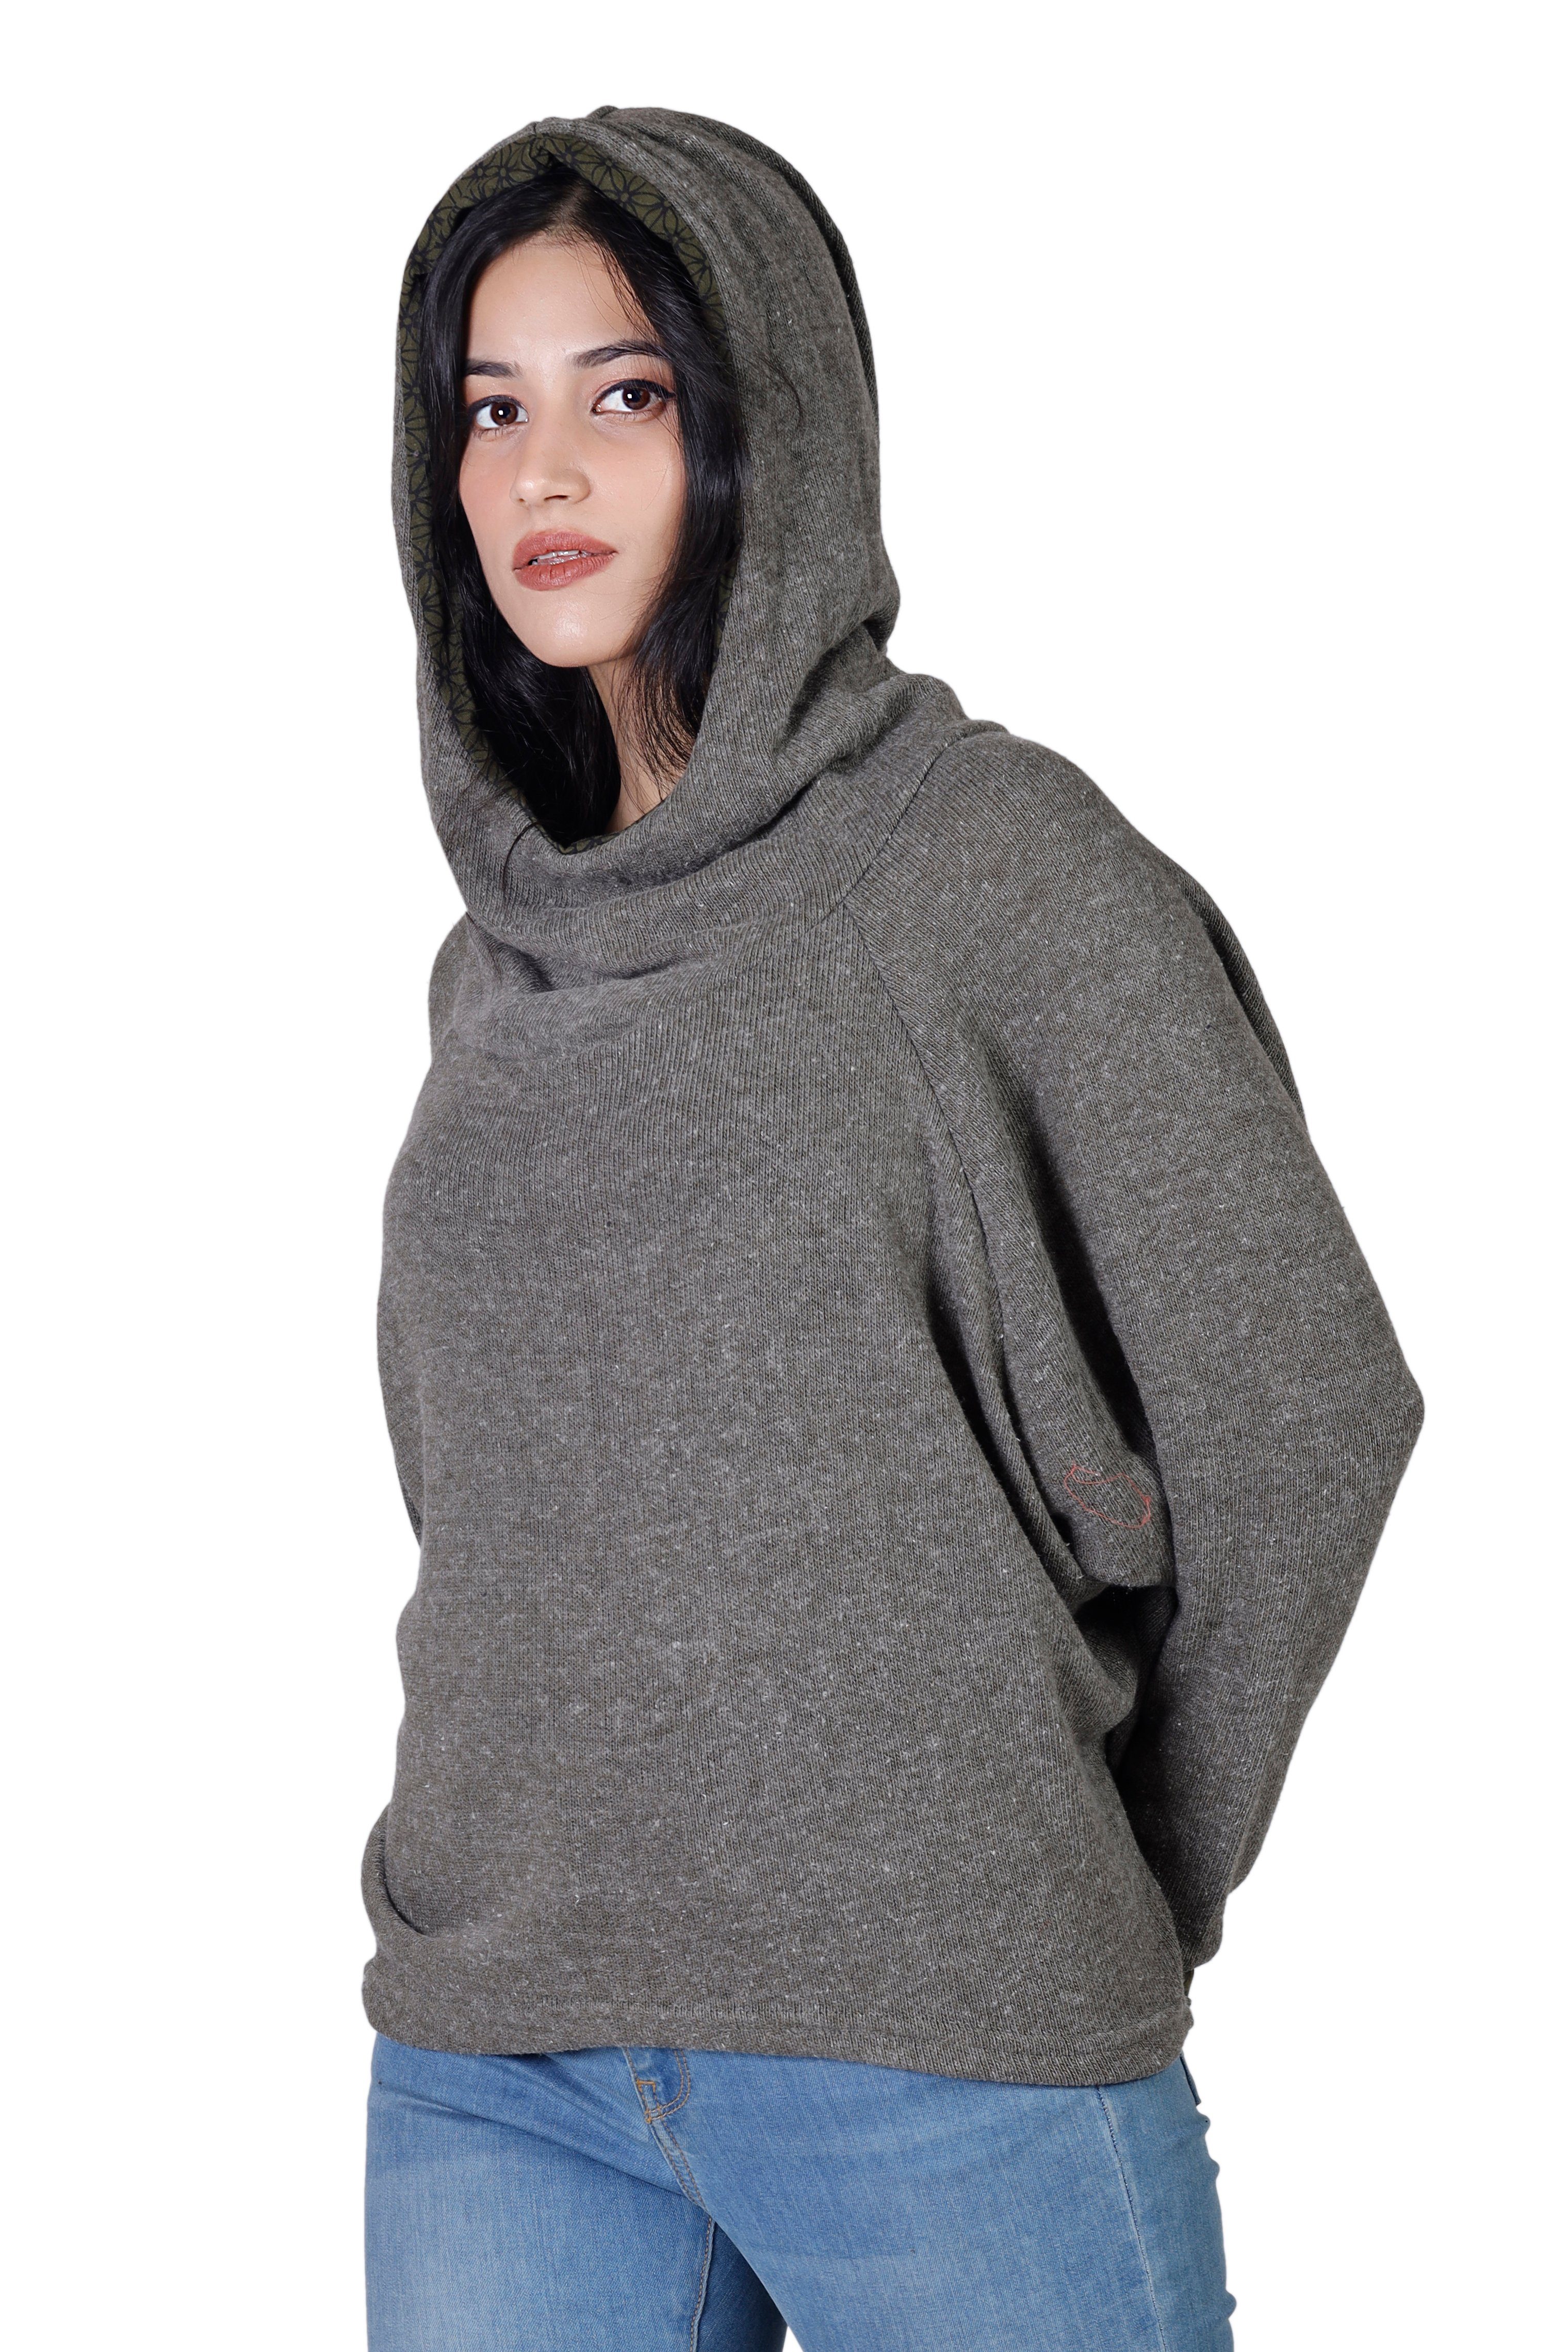 -.. Longsleeve Kapuzenpullover Guru-Shop Sweatshirt, Bekleidung Hoody, khakigrün Pullover, alternative